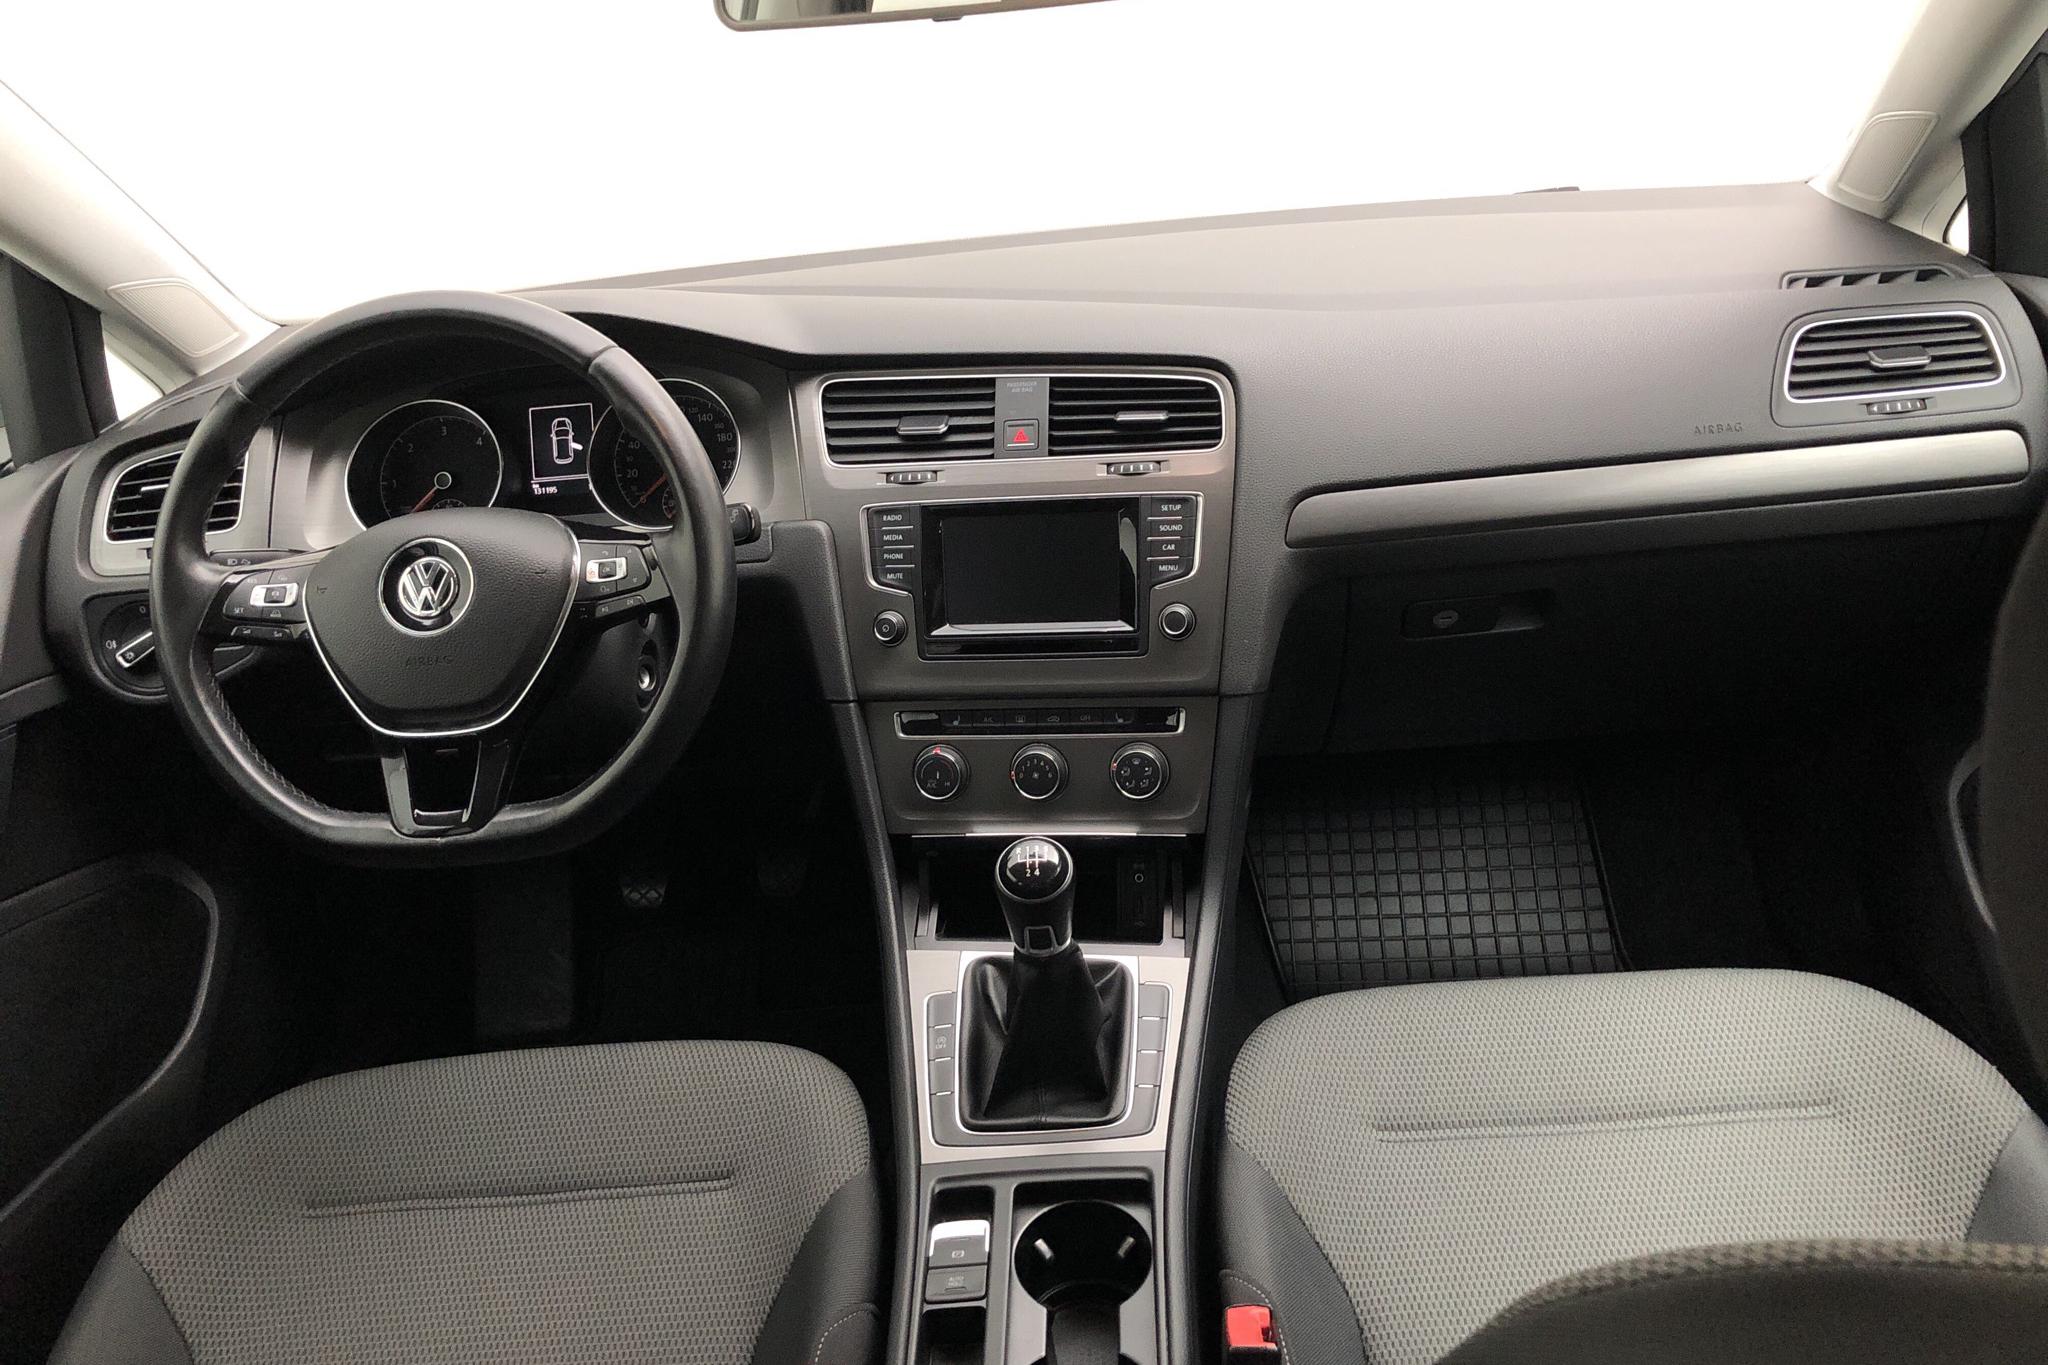 VW Golf VII 1.6 TDI BlueMotion Technology 5dr (105hk) - 13 120 mil - Manuell - silver - 2013